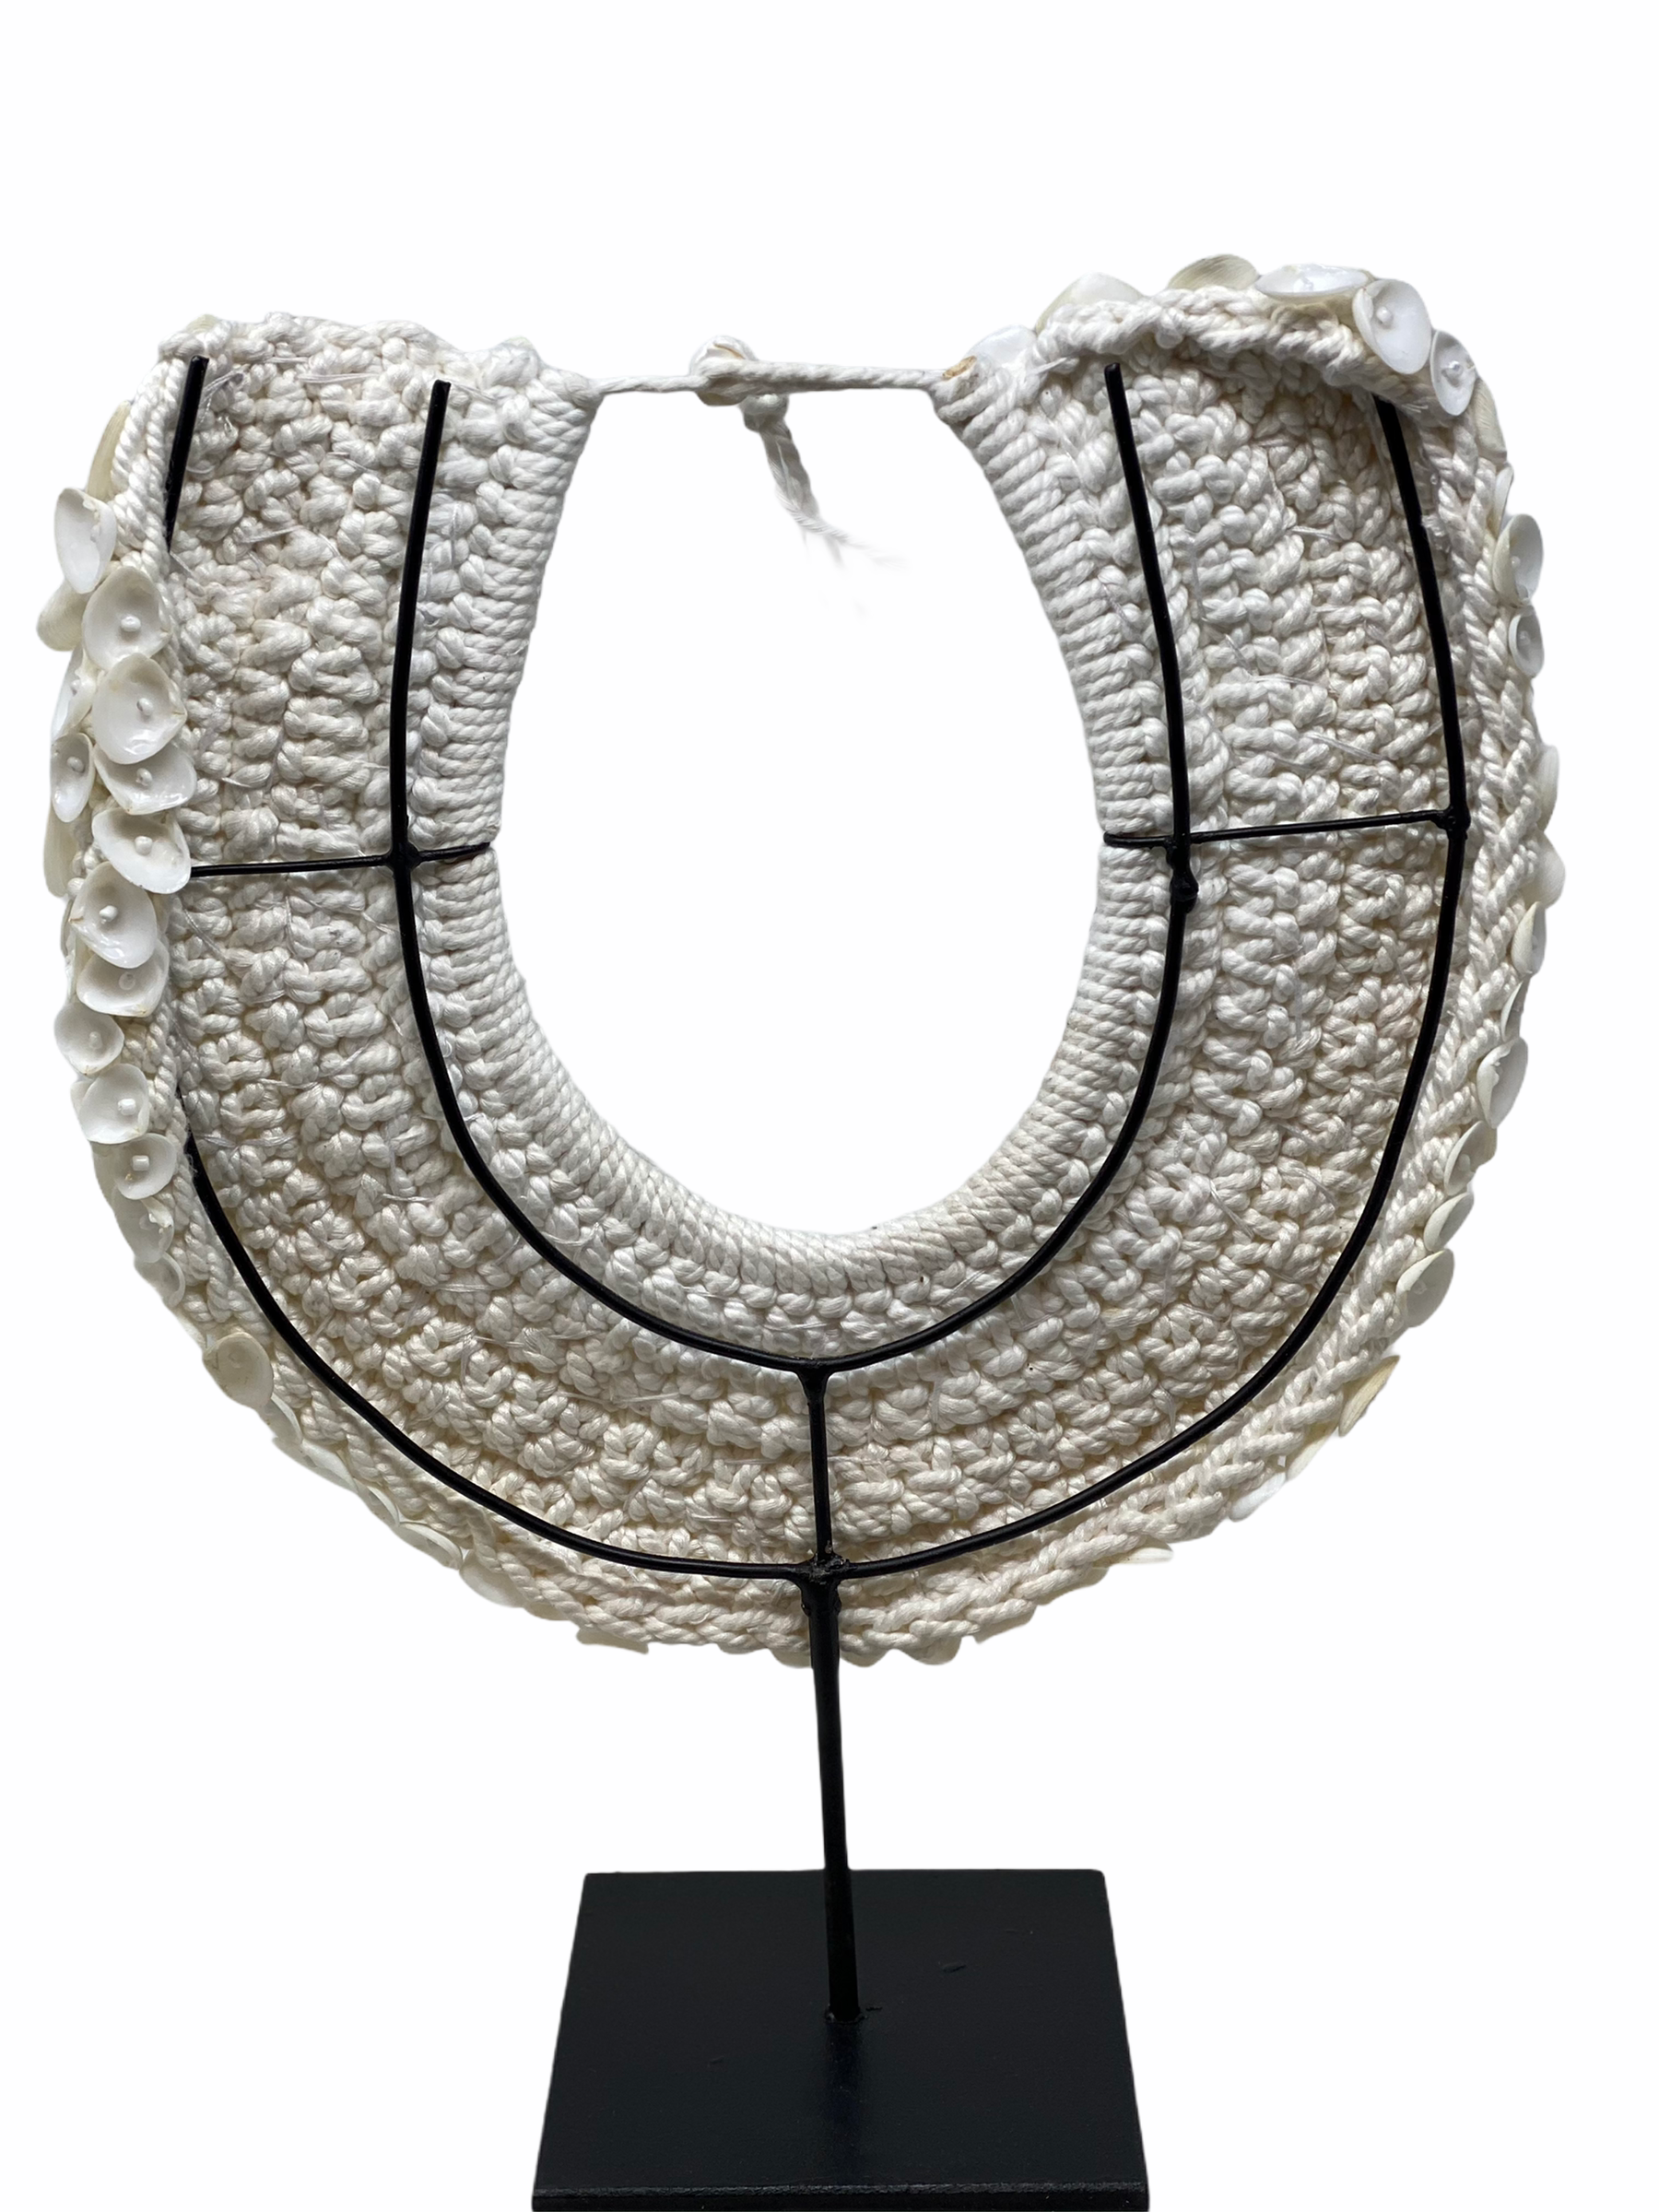 Handmade White Shell Necklace